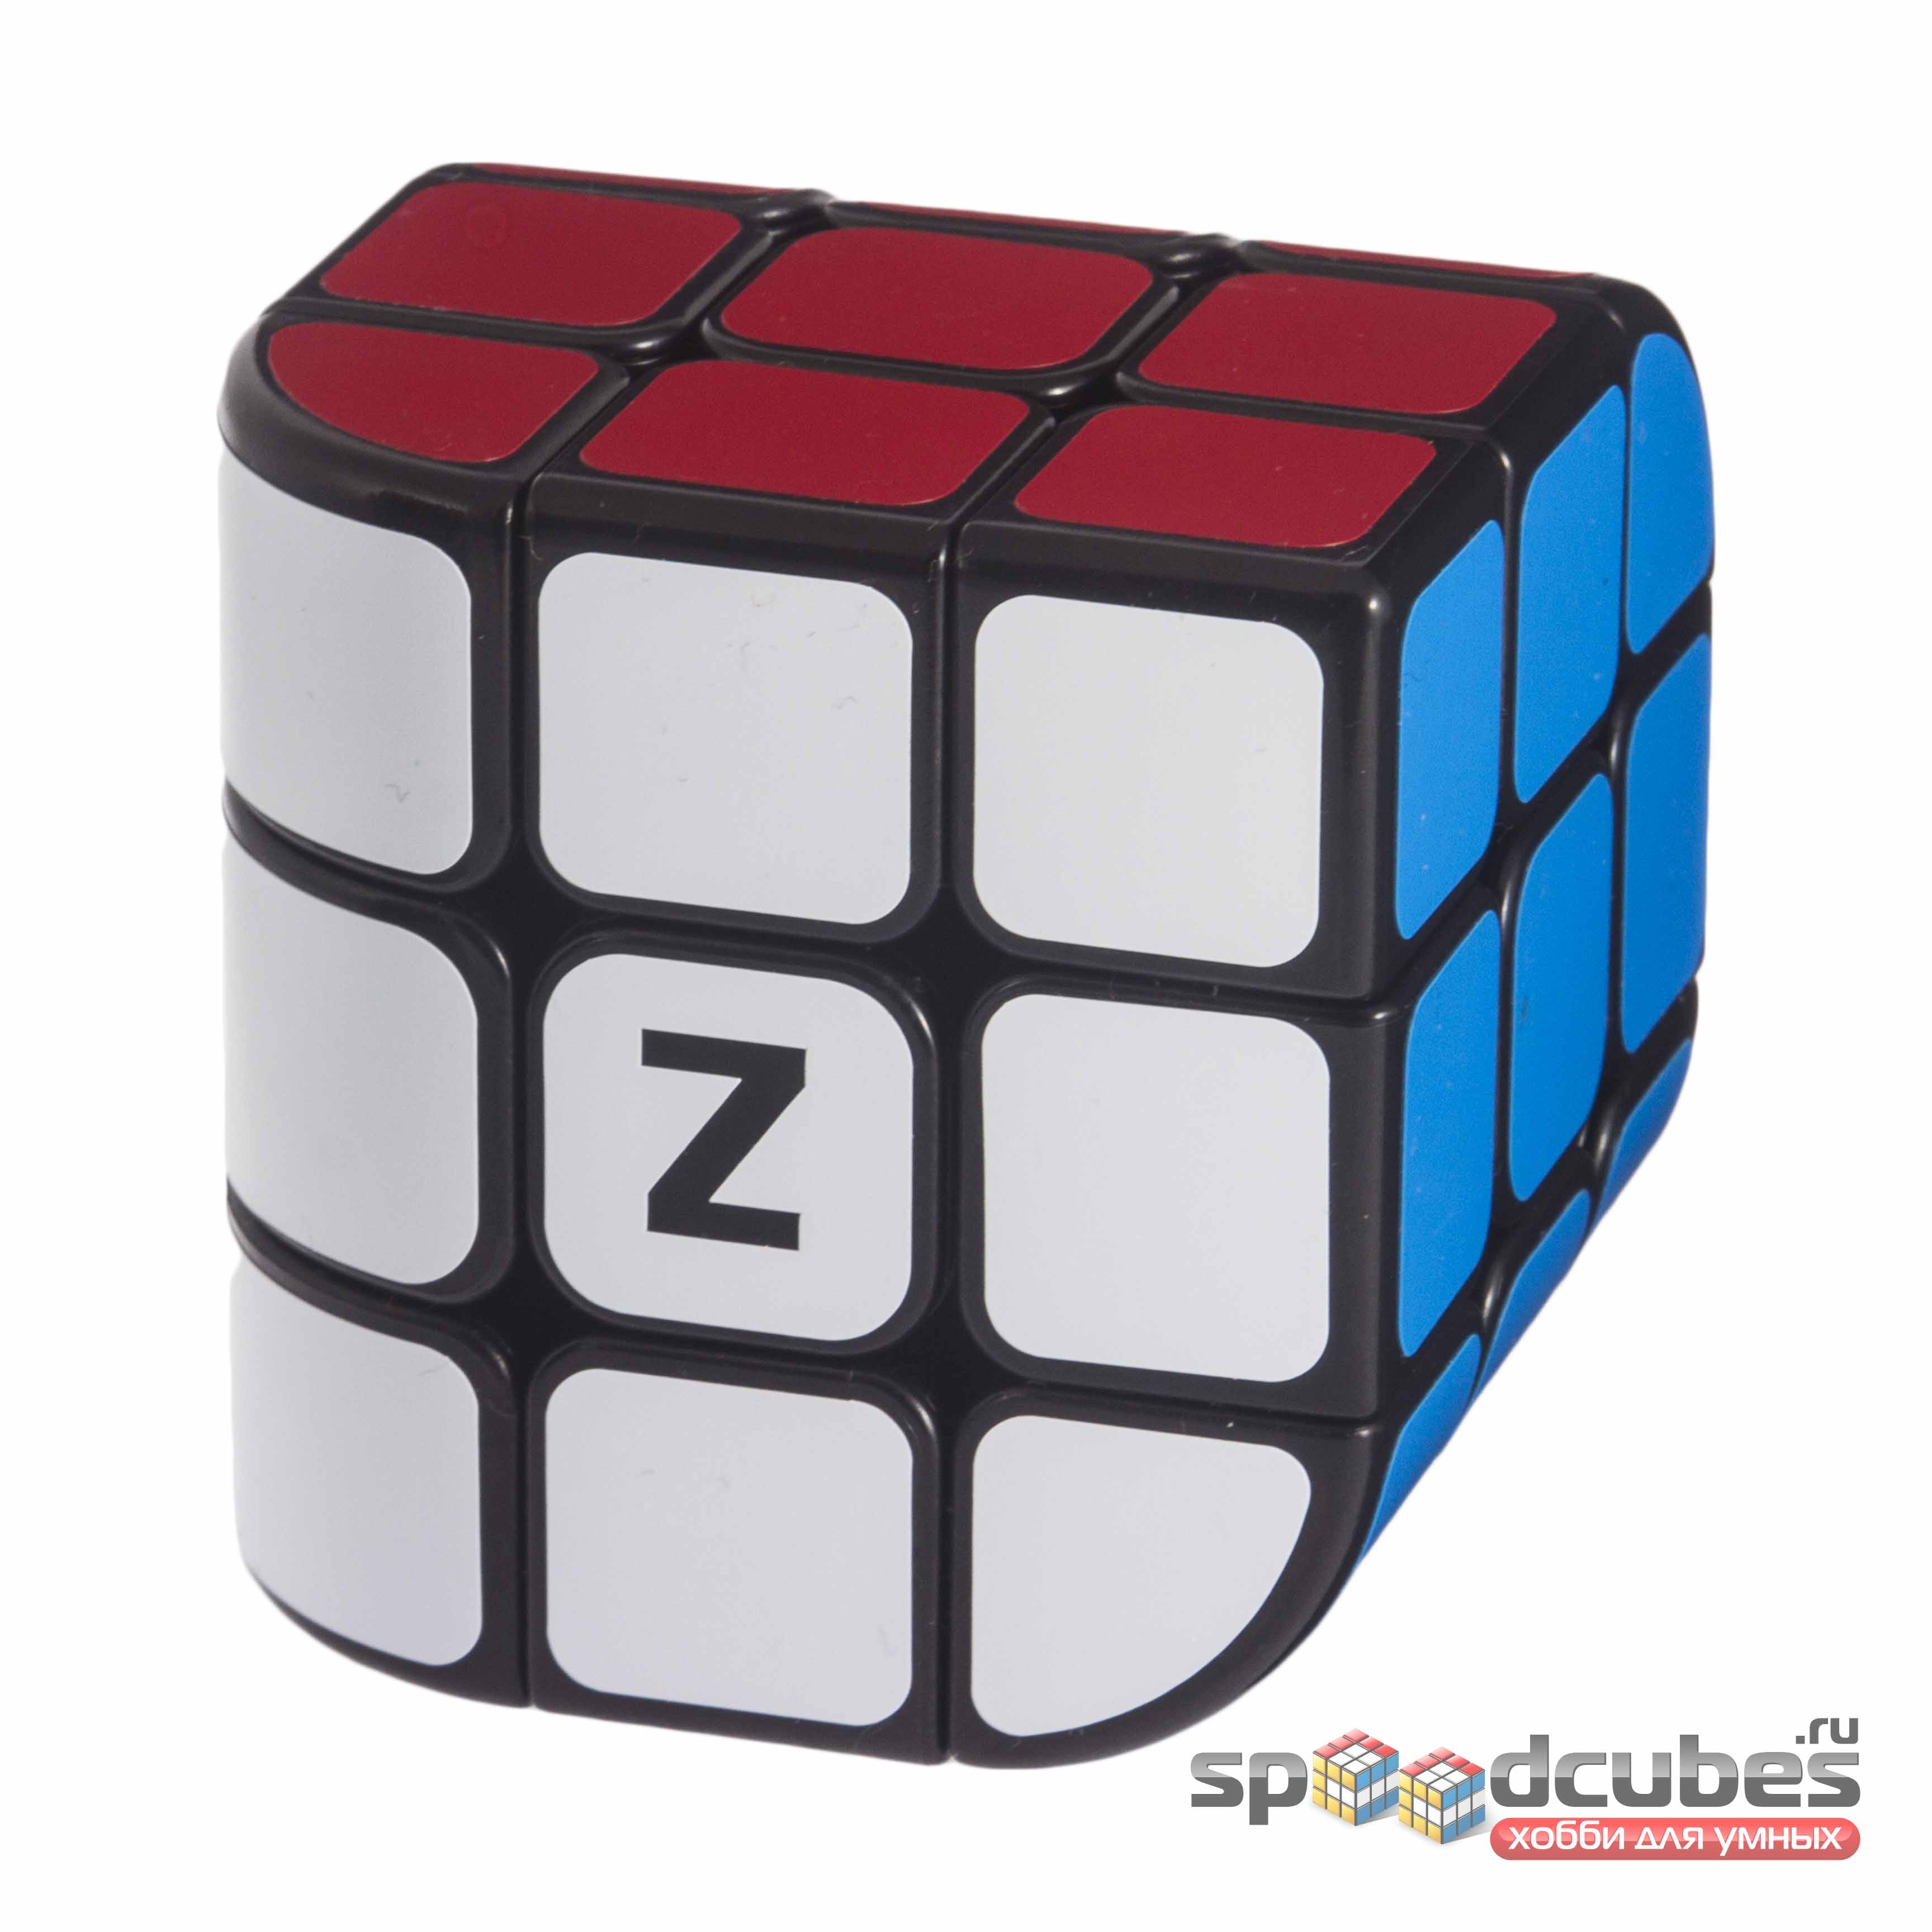 Z 3x3x3 Penrose